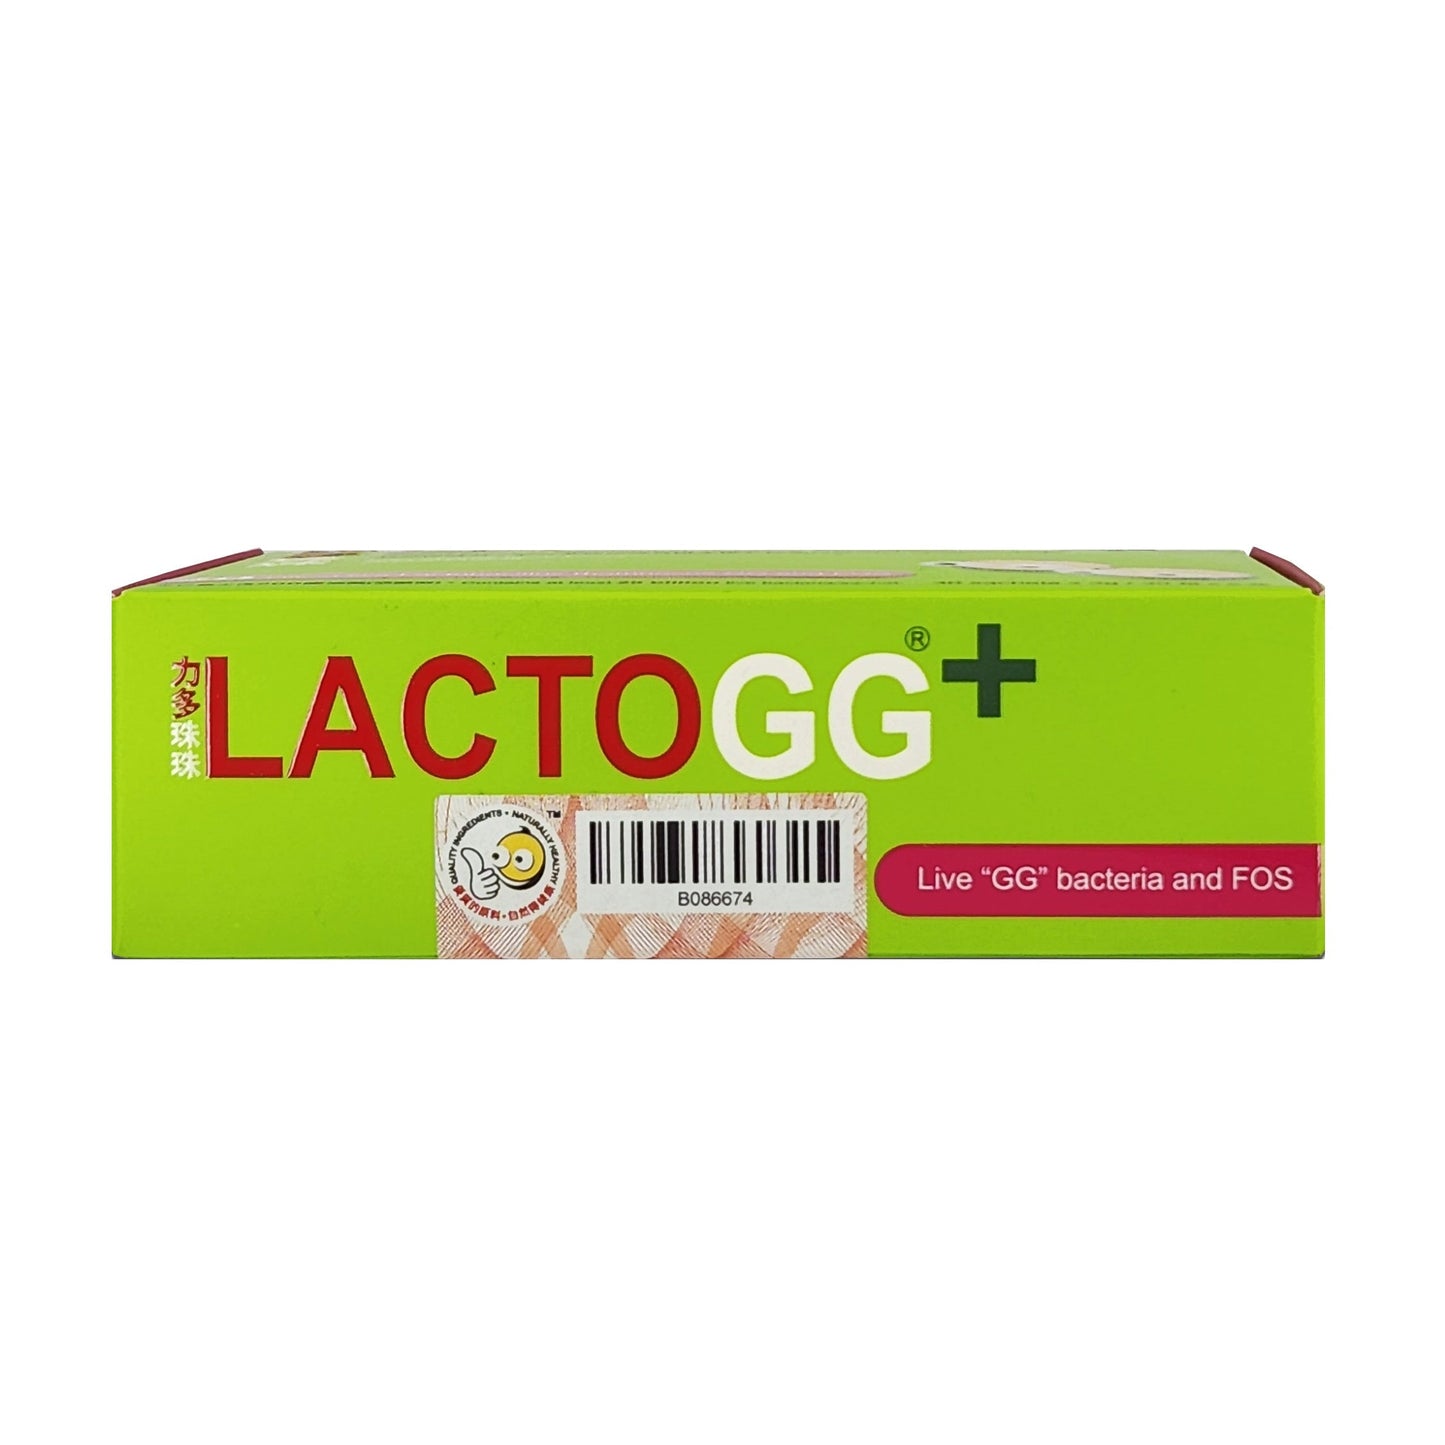 LactoGG+ Probiotics Sachets 30's -Lactobacillus GG